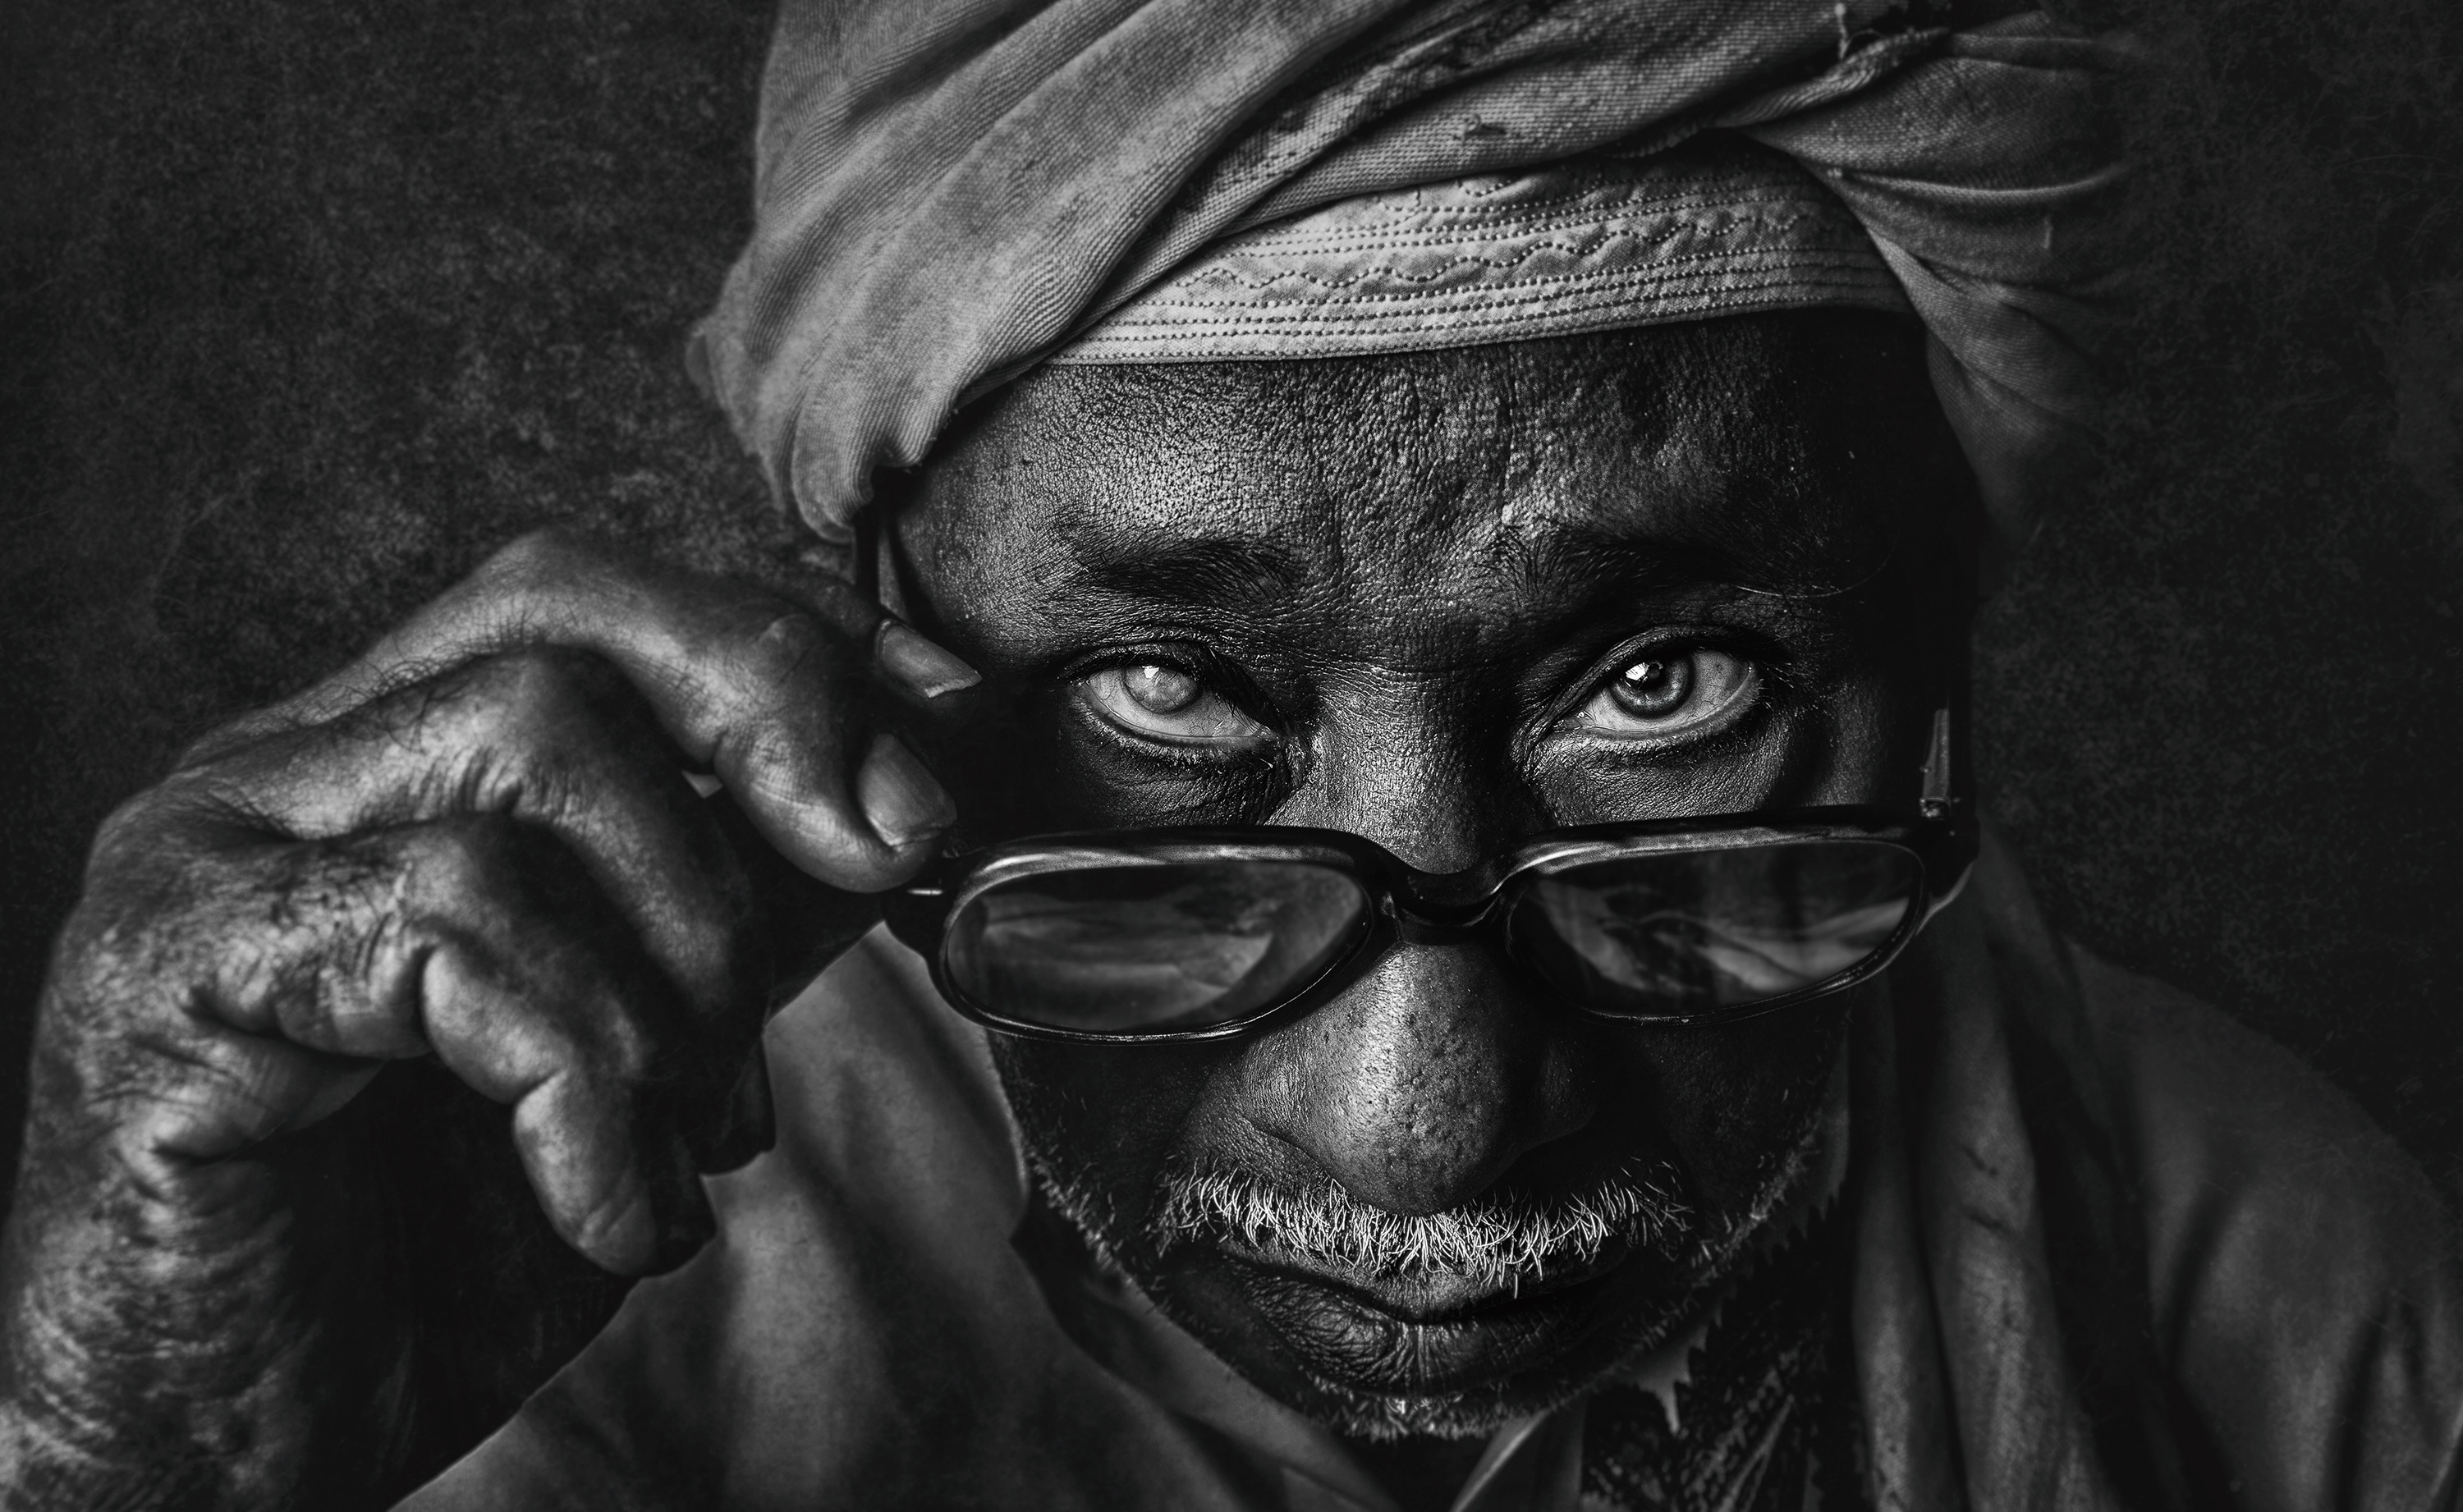 “It’s been a long journey” – Monochrome Portraits by Fadhel Almutaghawi